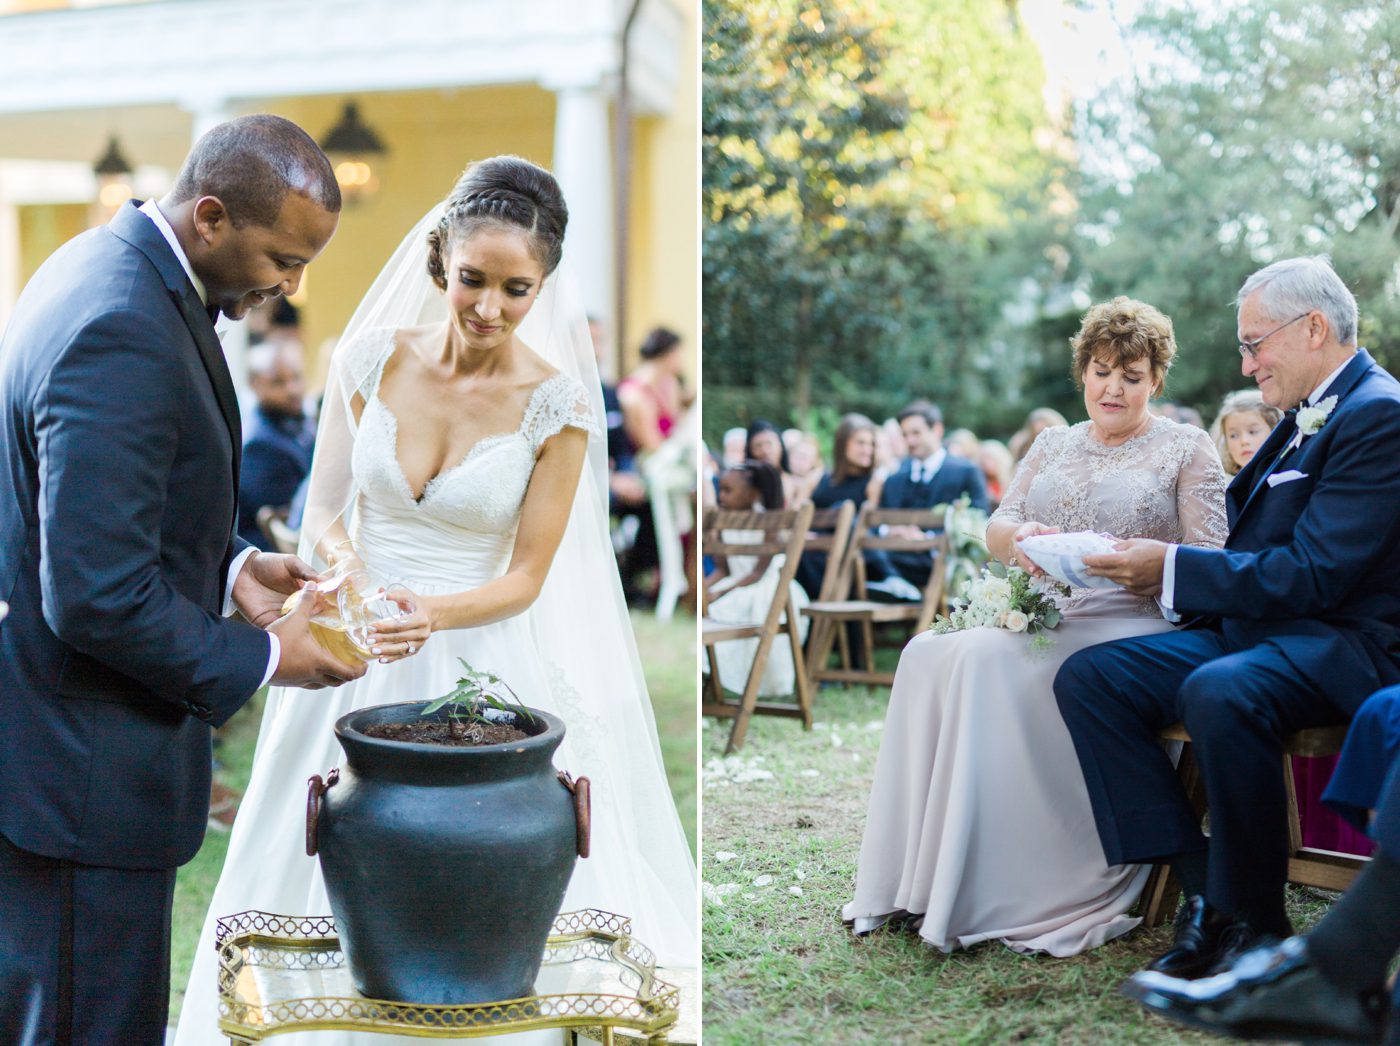 Plant watering ceremony at Charleston wedding | Elegant William Aiken House Wedding Photos | Charleston SC wedding photographers Catherine Ann Photography